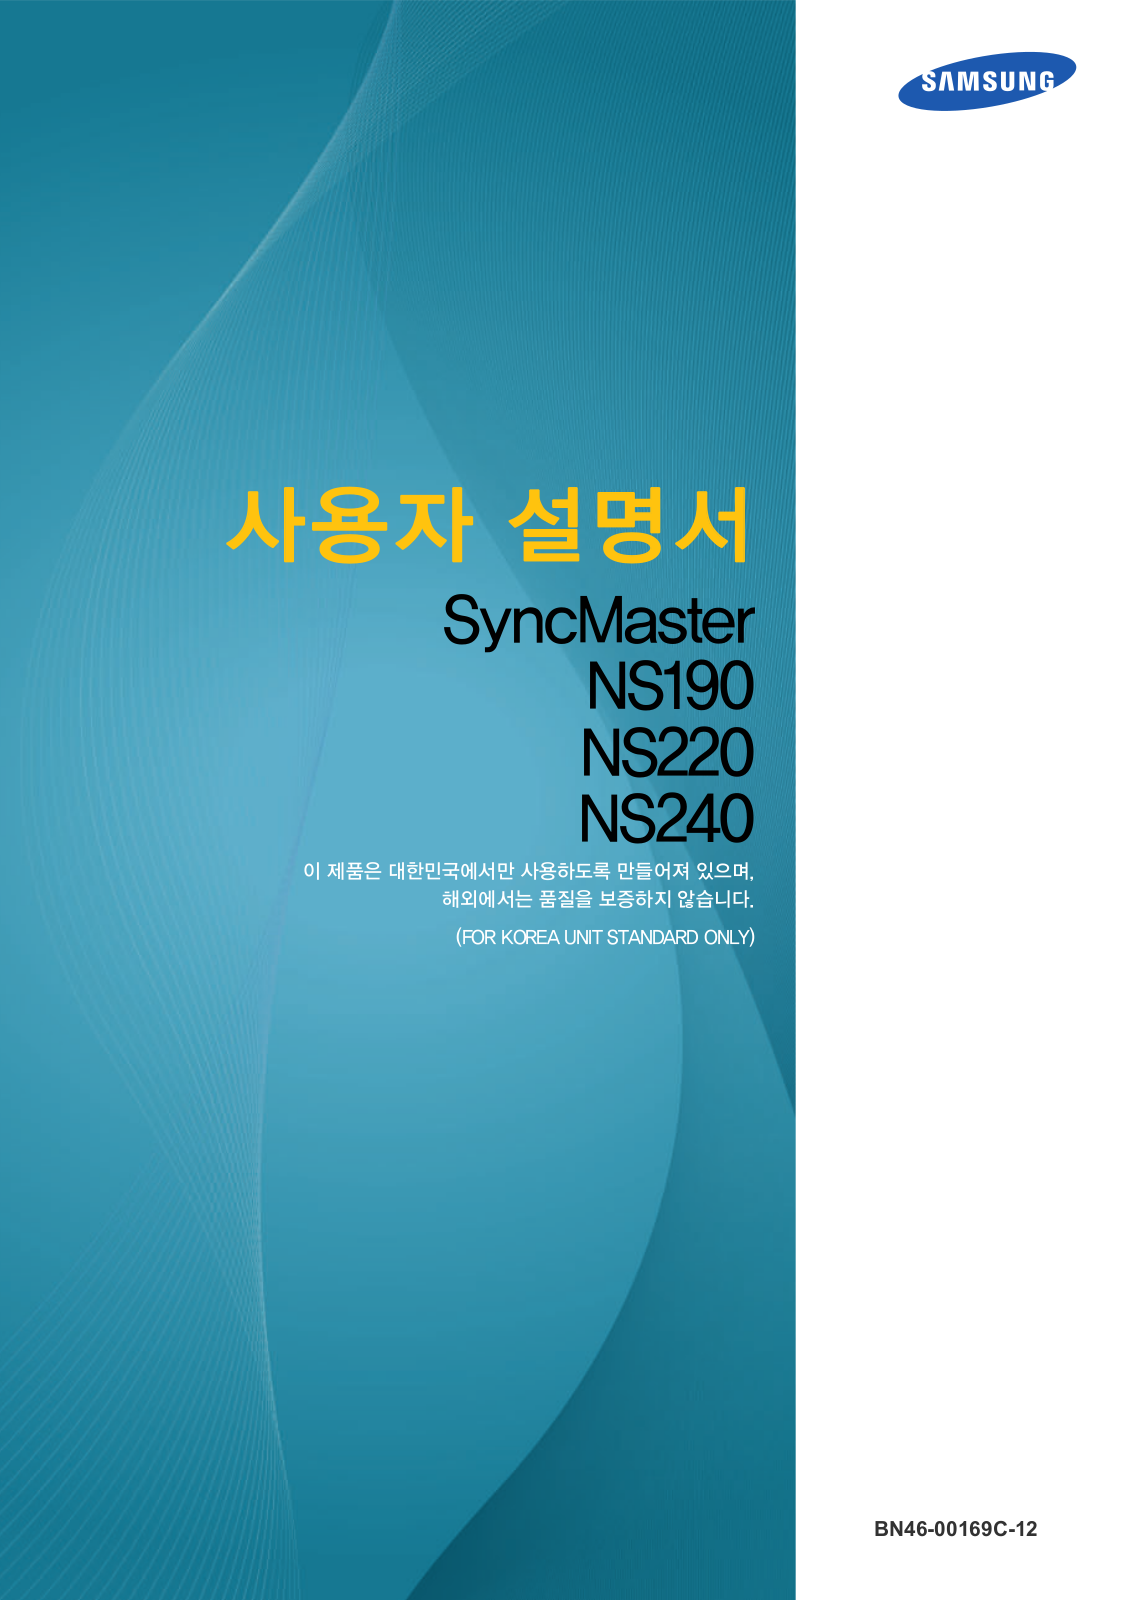 Samsung SYNCMASTER NS240, SYNCMASTER NS220 Manual